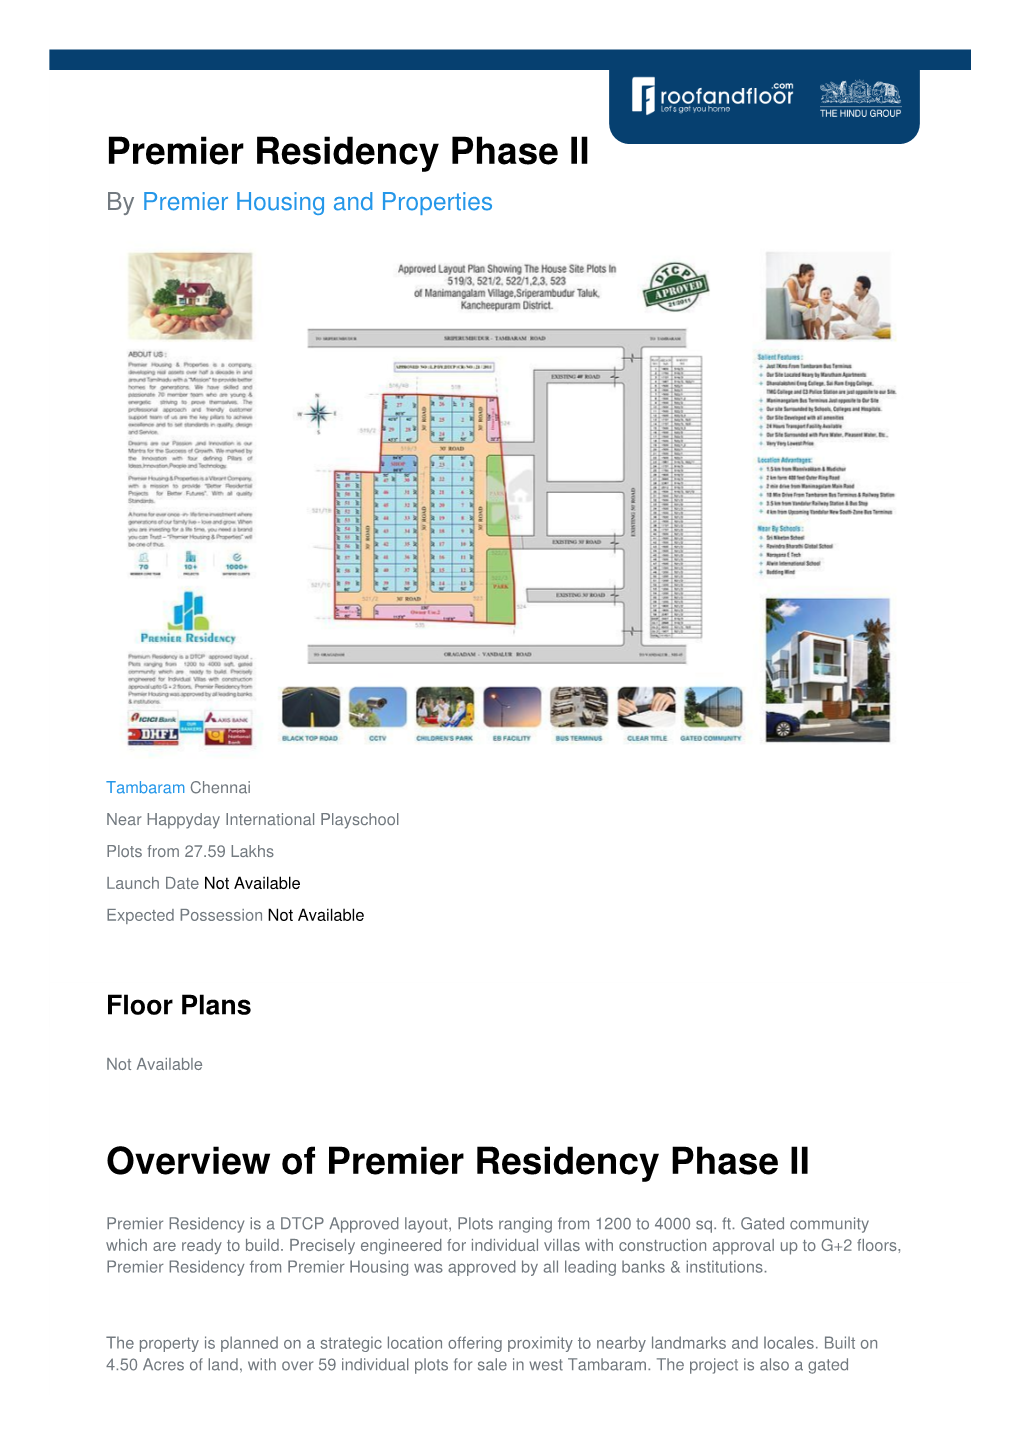 Premier Residency Phase II by Premier Housing and Properties